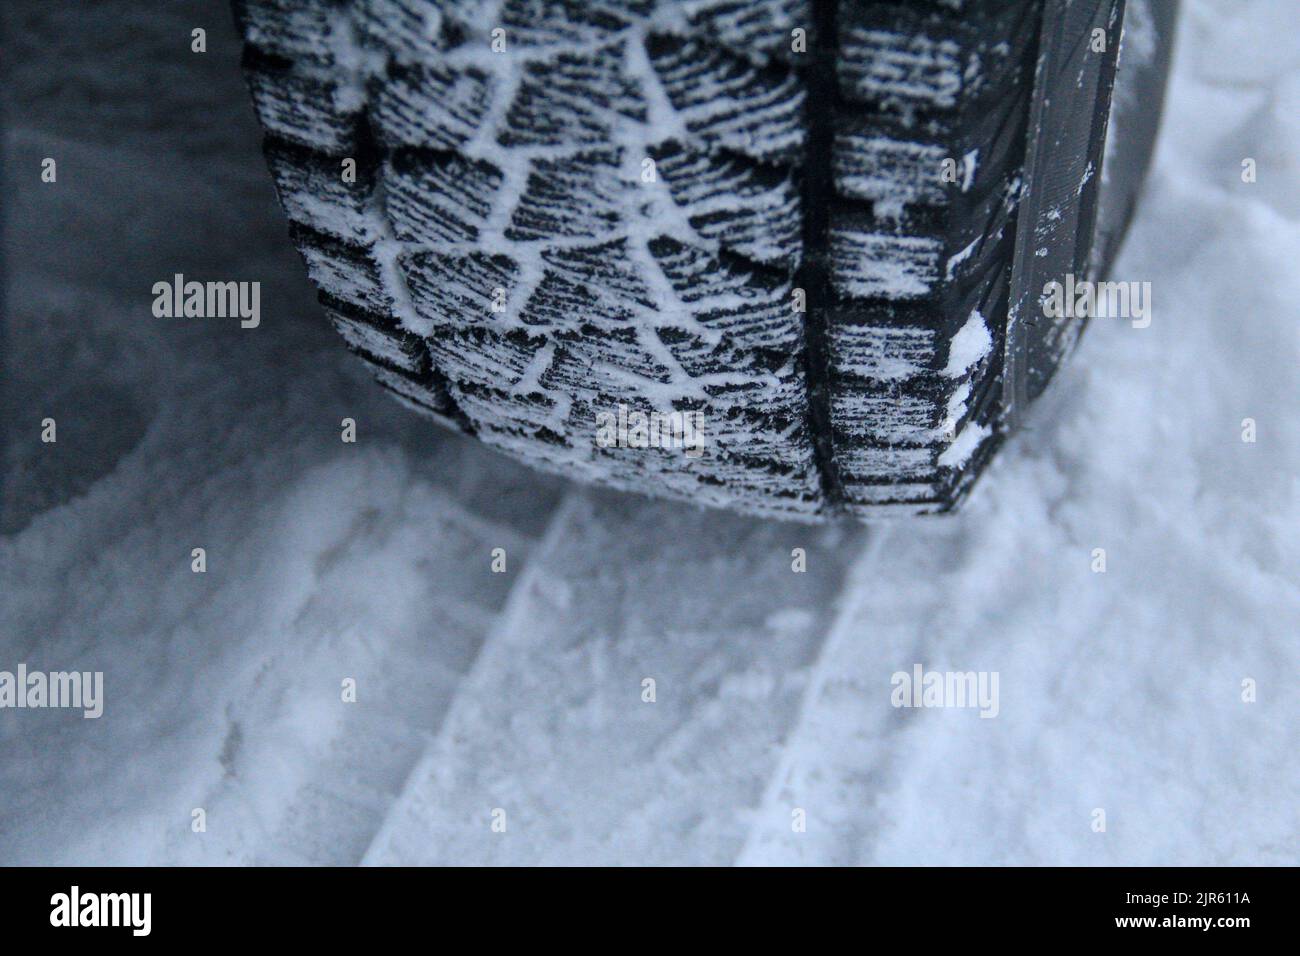 Winter car tire tread with snow between blocks Stock Photo